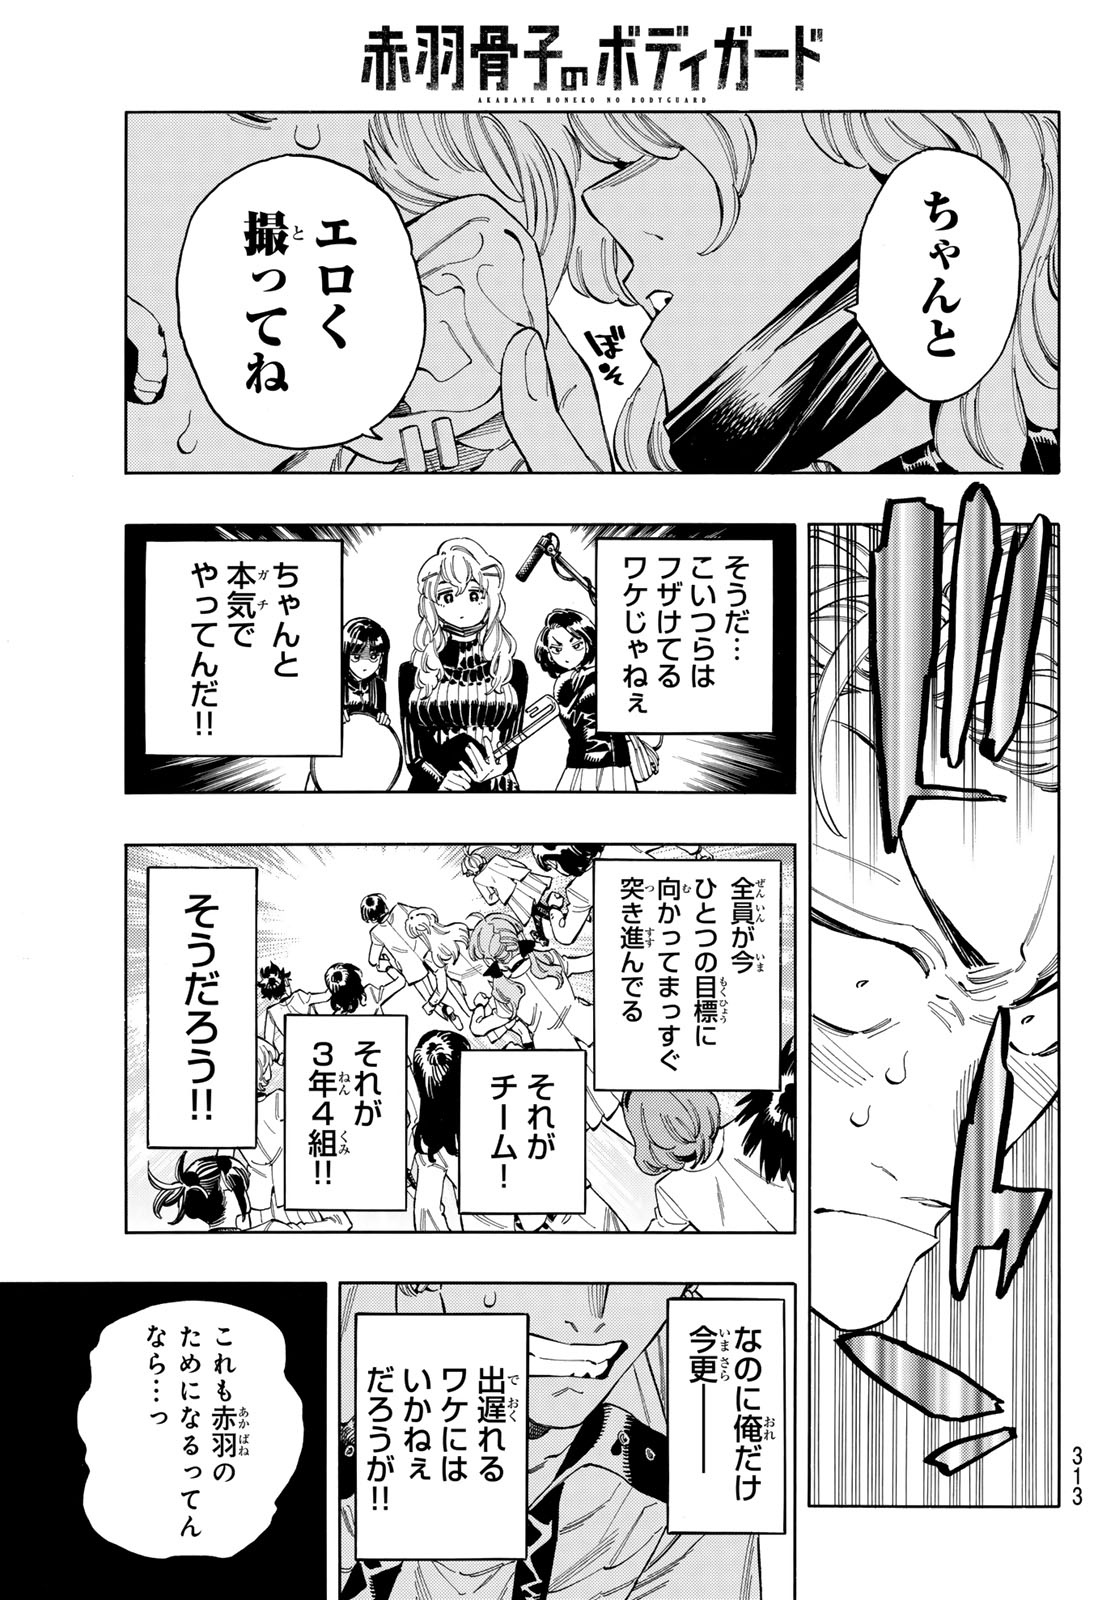 Akabane Honeko no Bodyguard - Chapter 82 - Page 17